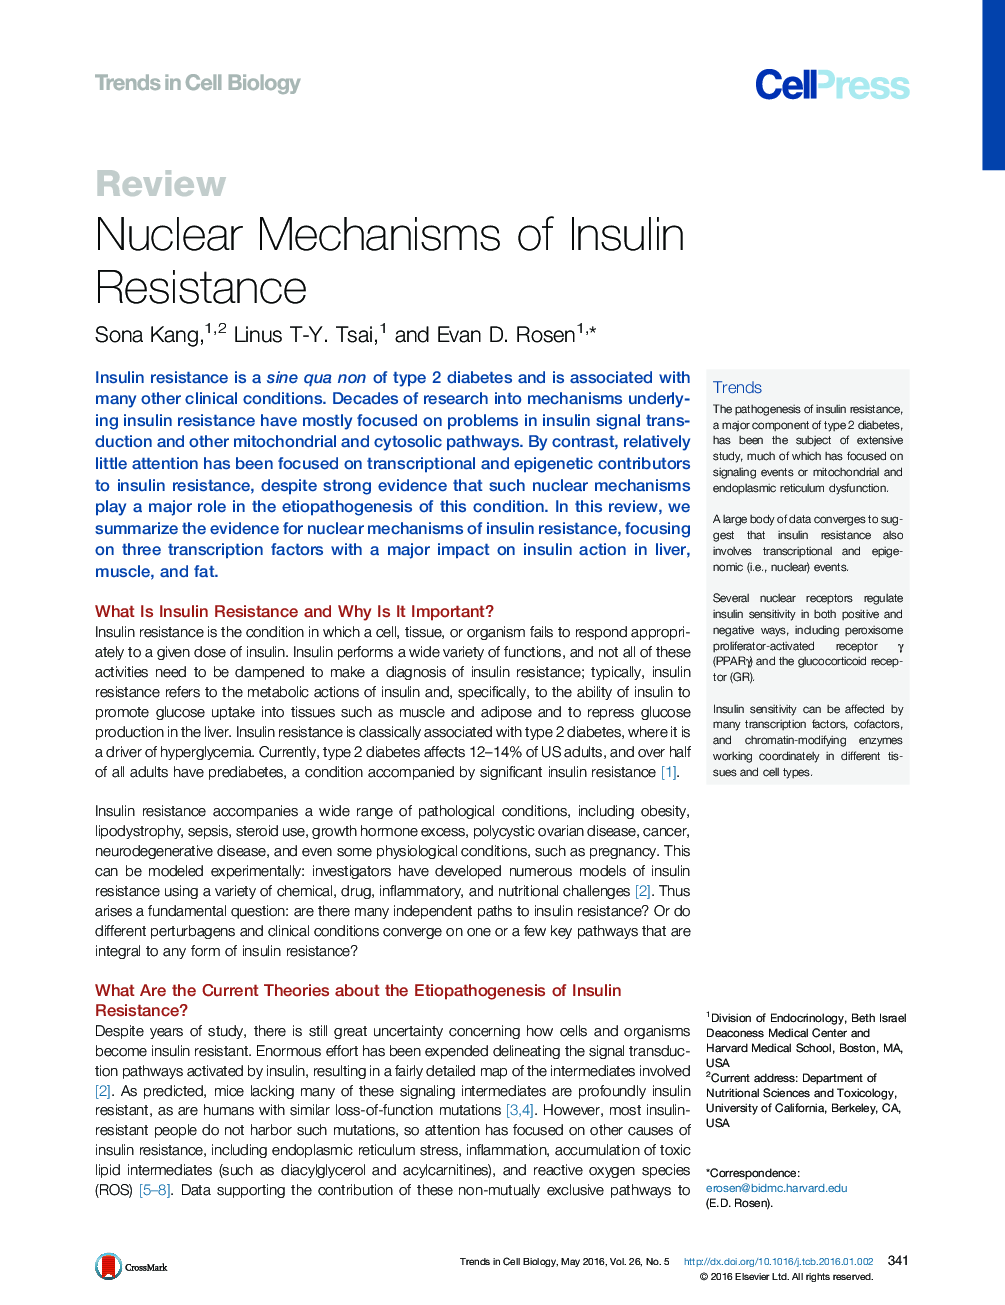 Nuclear Mechanisms of Insulin Resistance